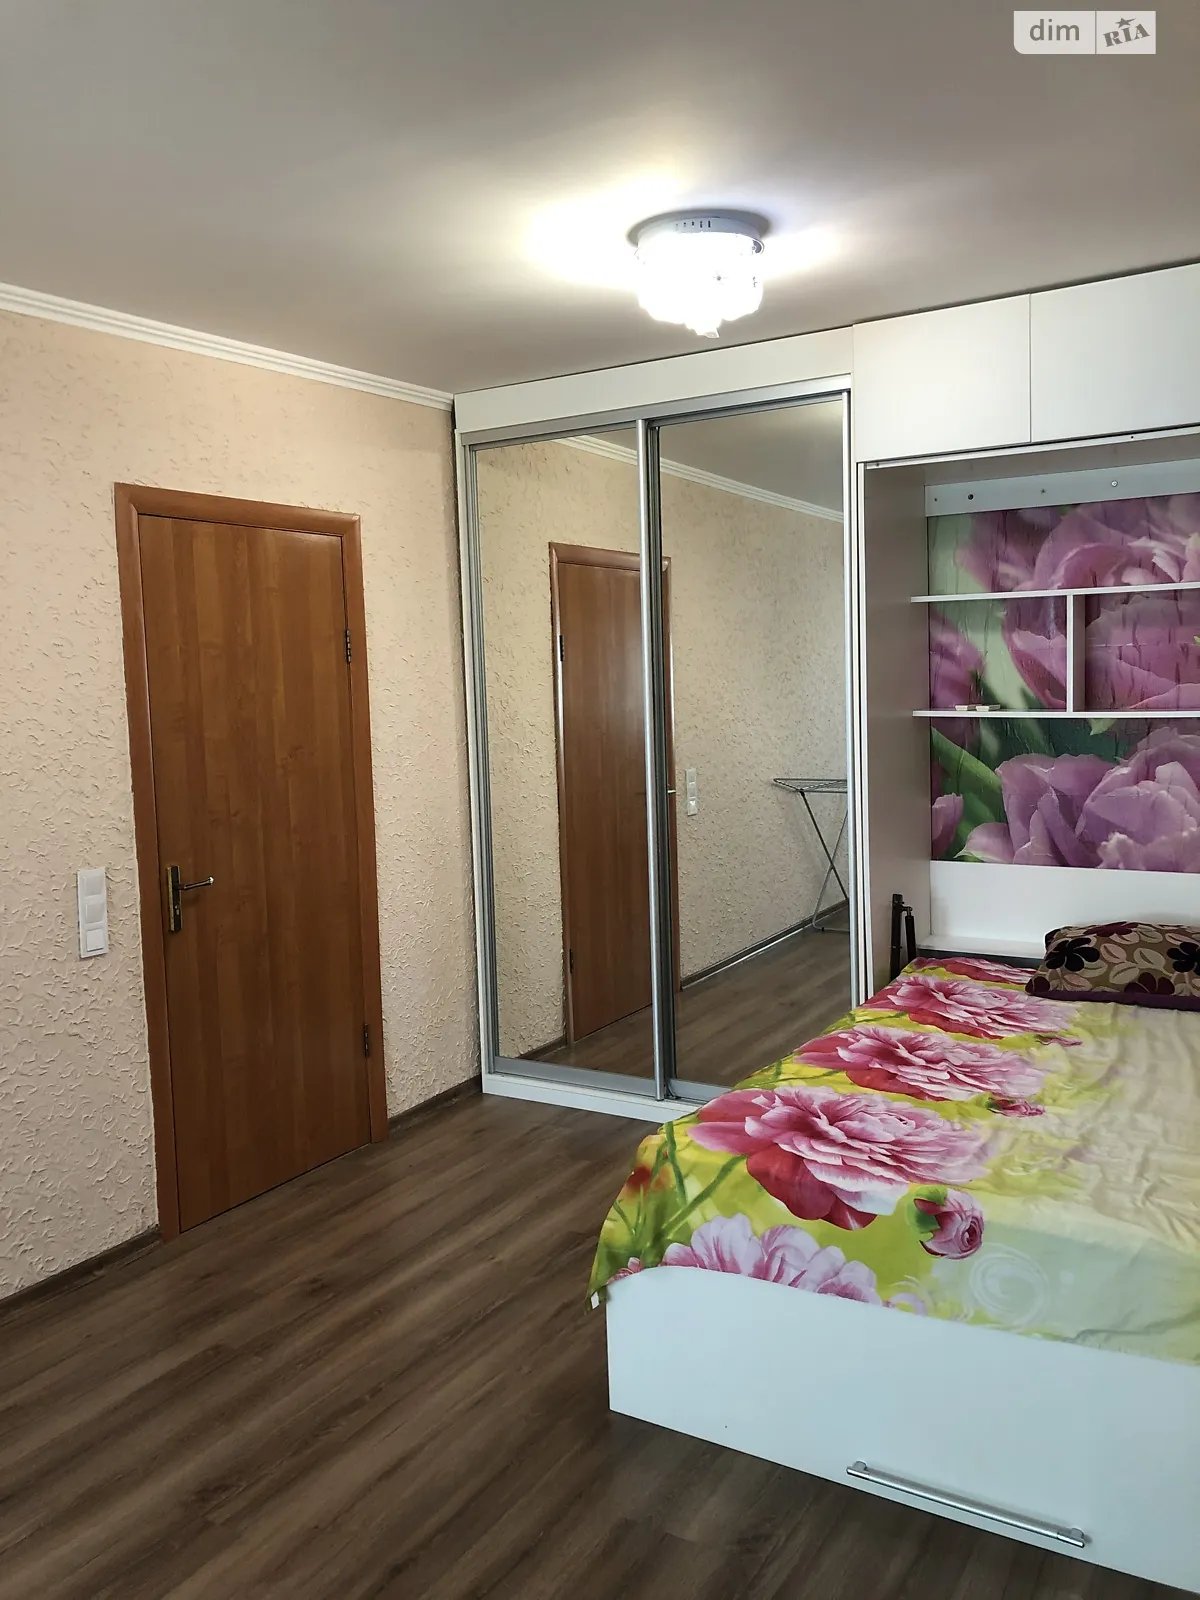 Сдается в аренду комната 36 кв. м в Одессе, цена: 4500 грн - фото 1